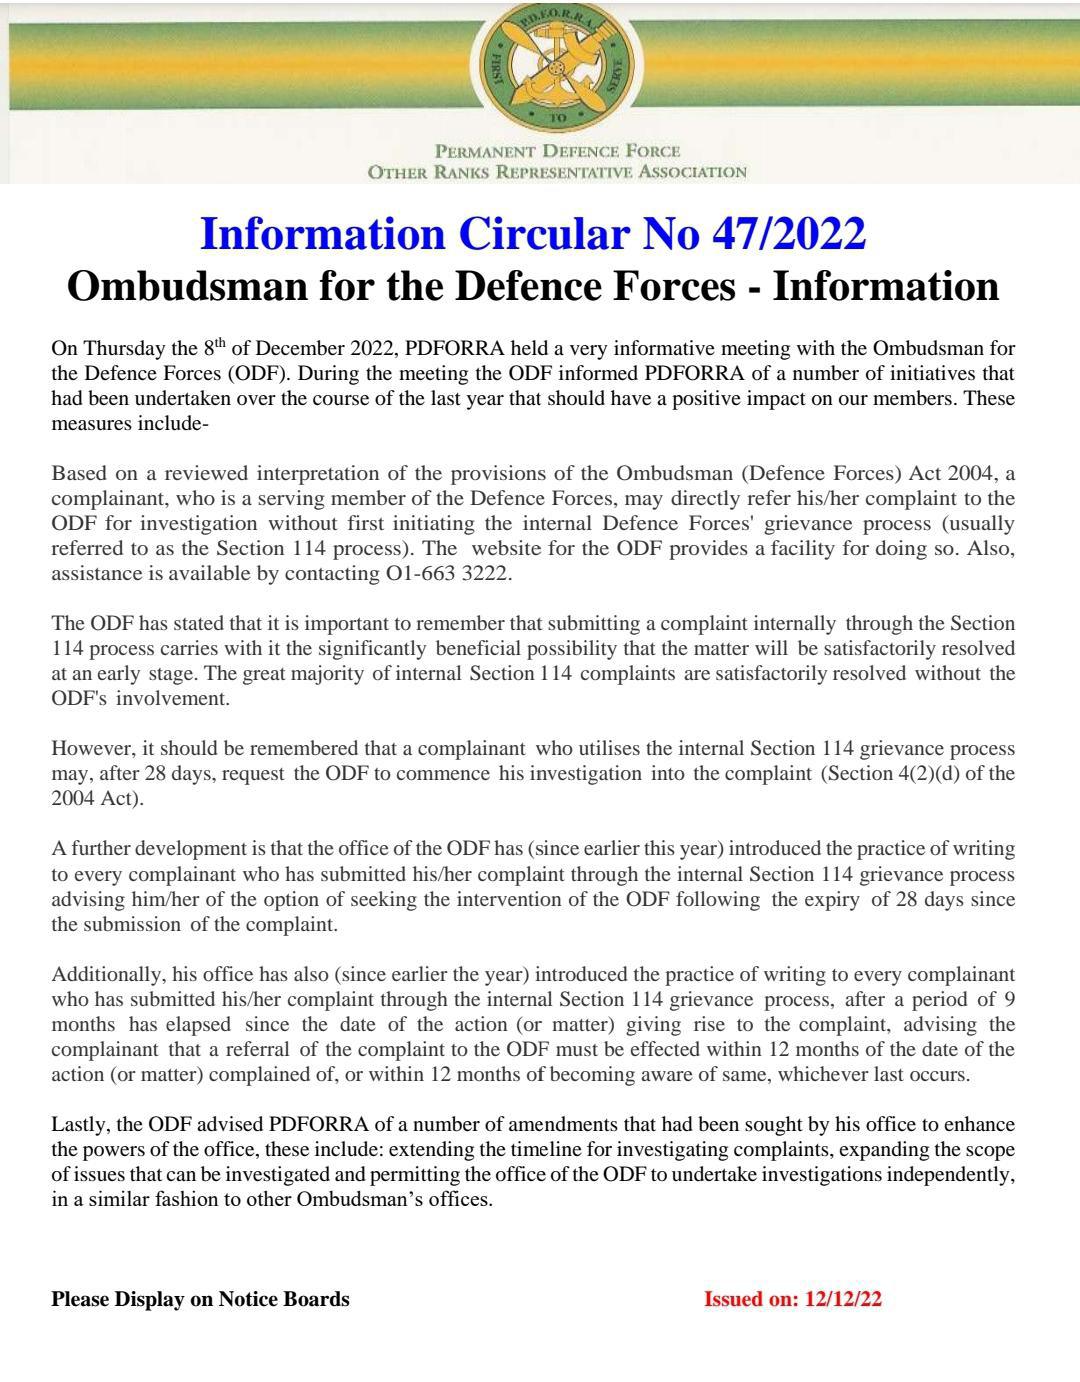 Information Circular No 47 of 22 - ODF Information